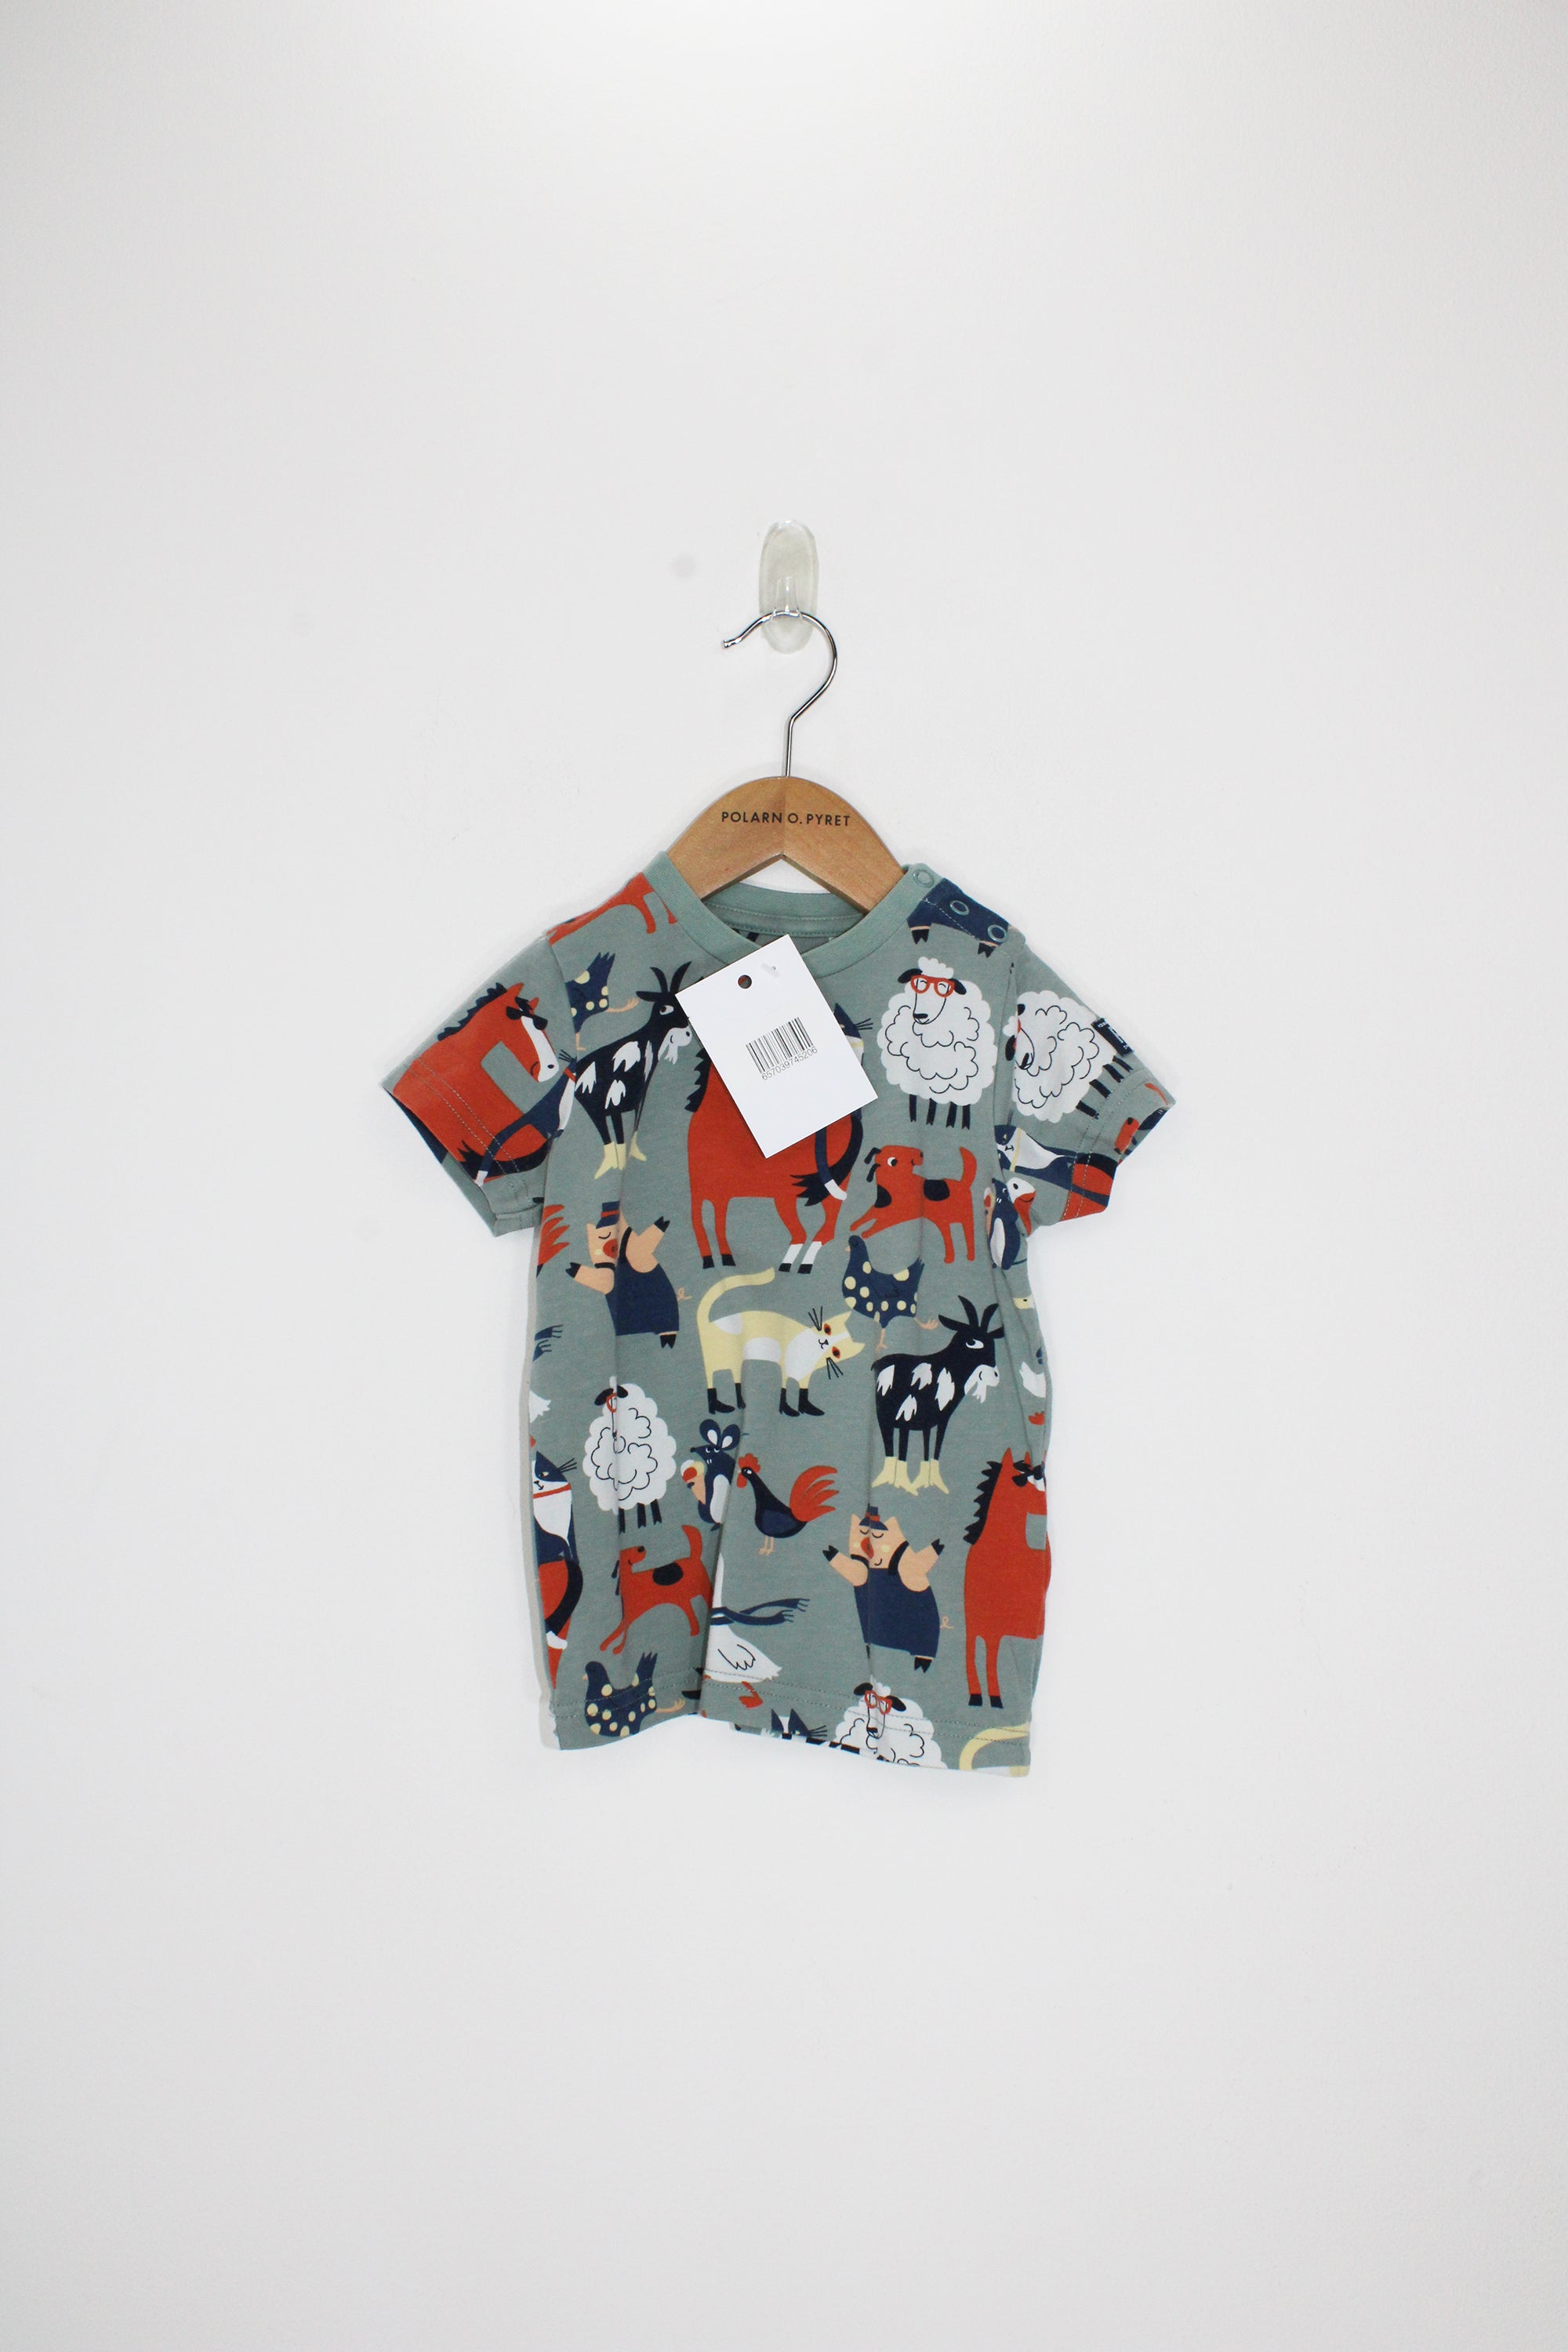 Animal Print Kids T-Shirt